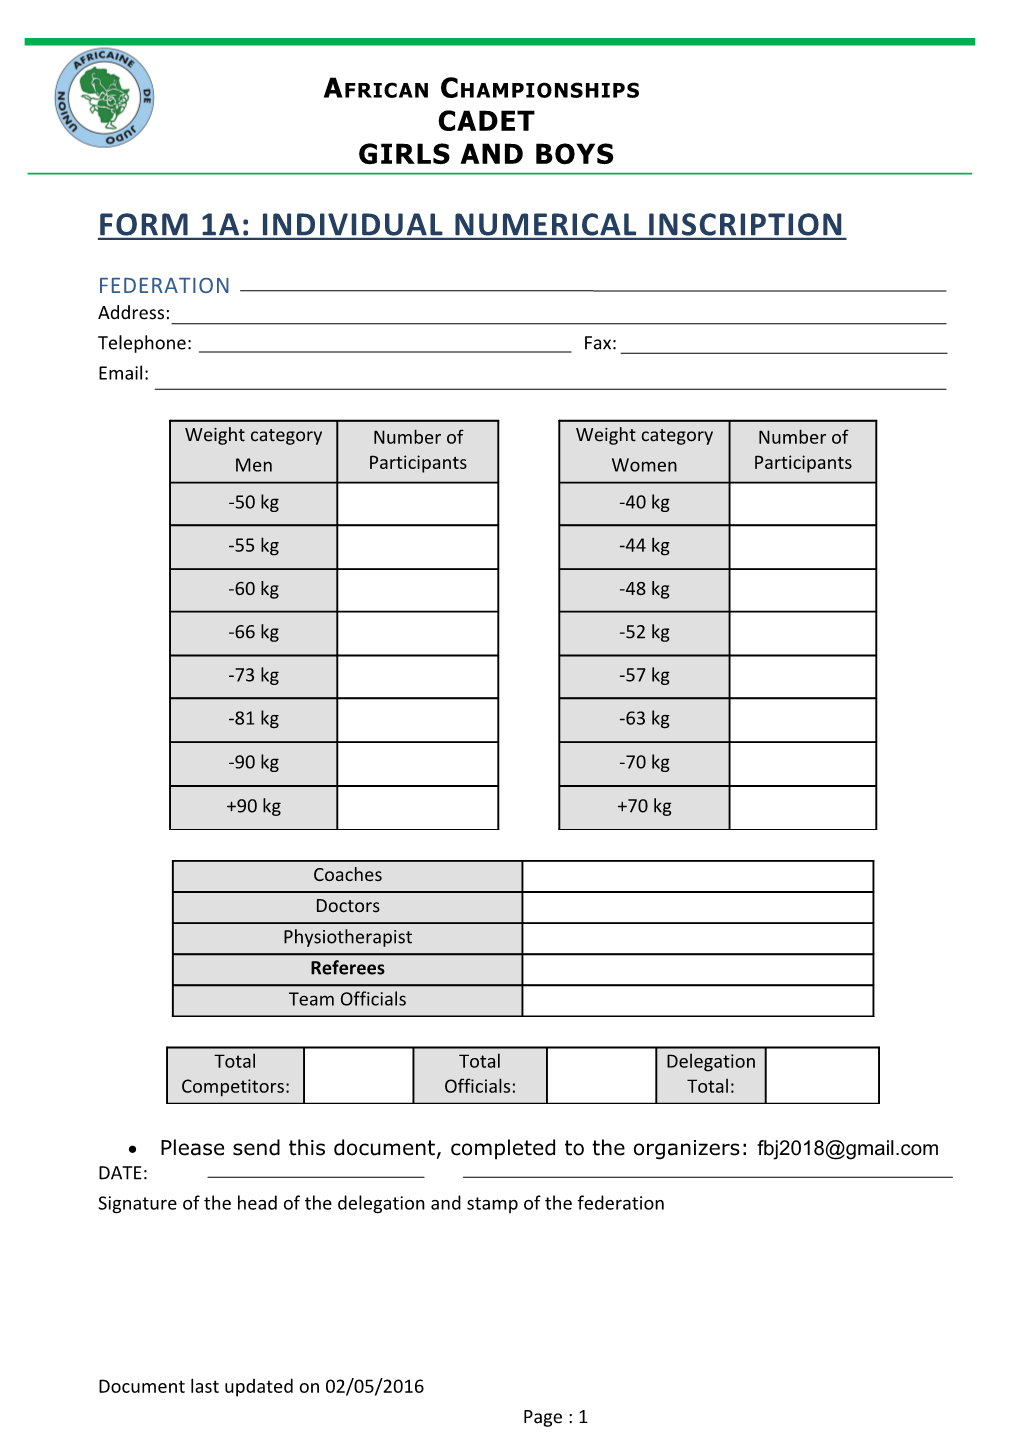 Form 1A: Individual Numerical Inscription